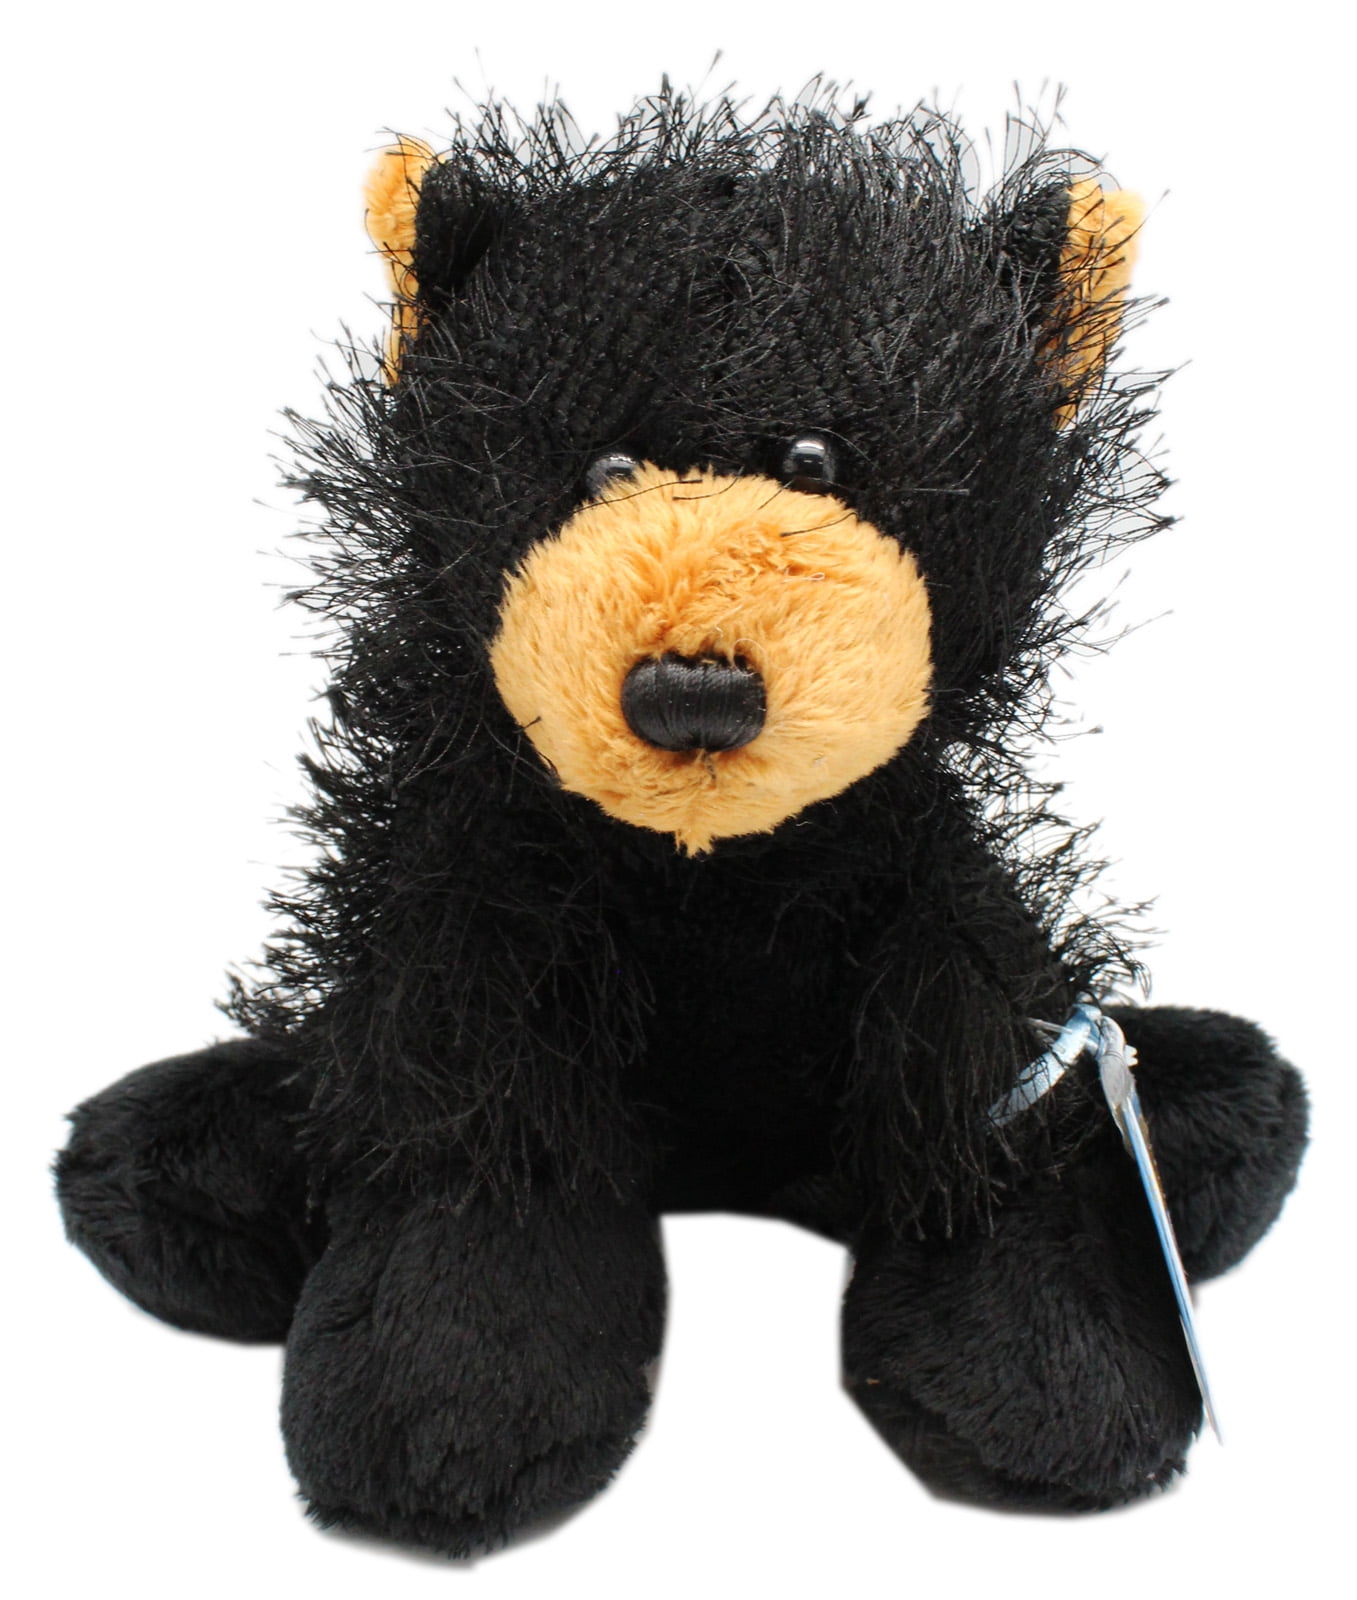 Stuffed Animal No Code Details about   Webkinz Signature BLACK BEAR 9"  WKSS2002 Plush Toy 